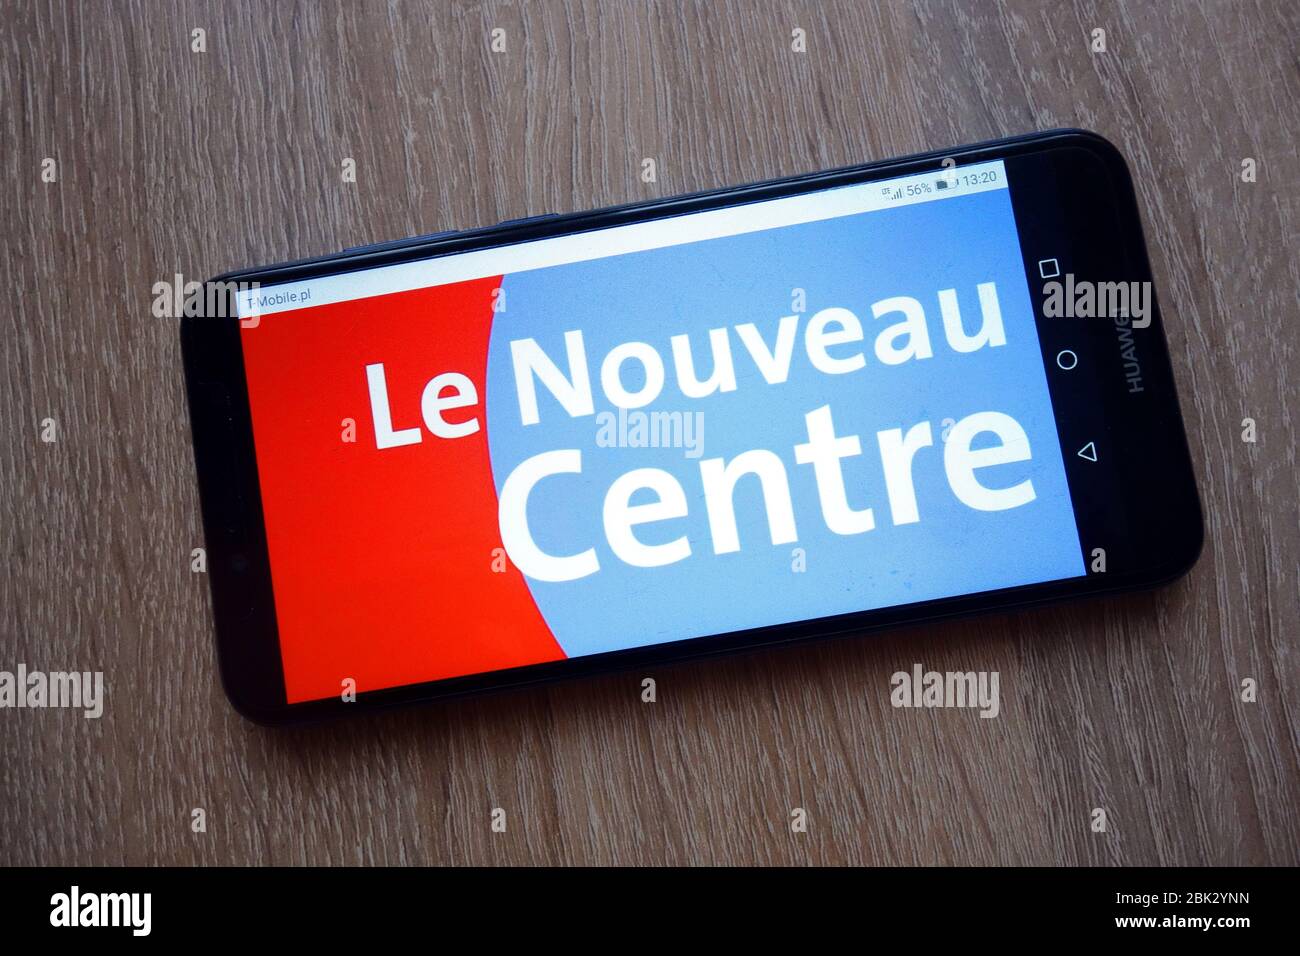 Le Nouveau Centre party logo displayed on smartphone Stock Photo